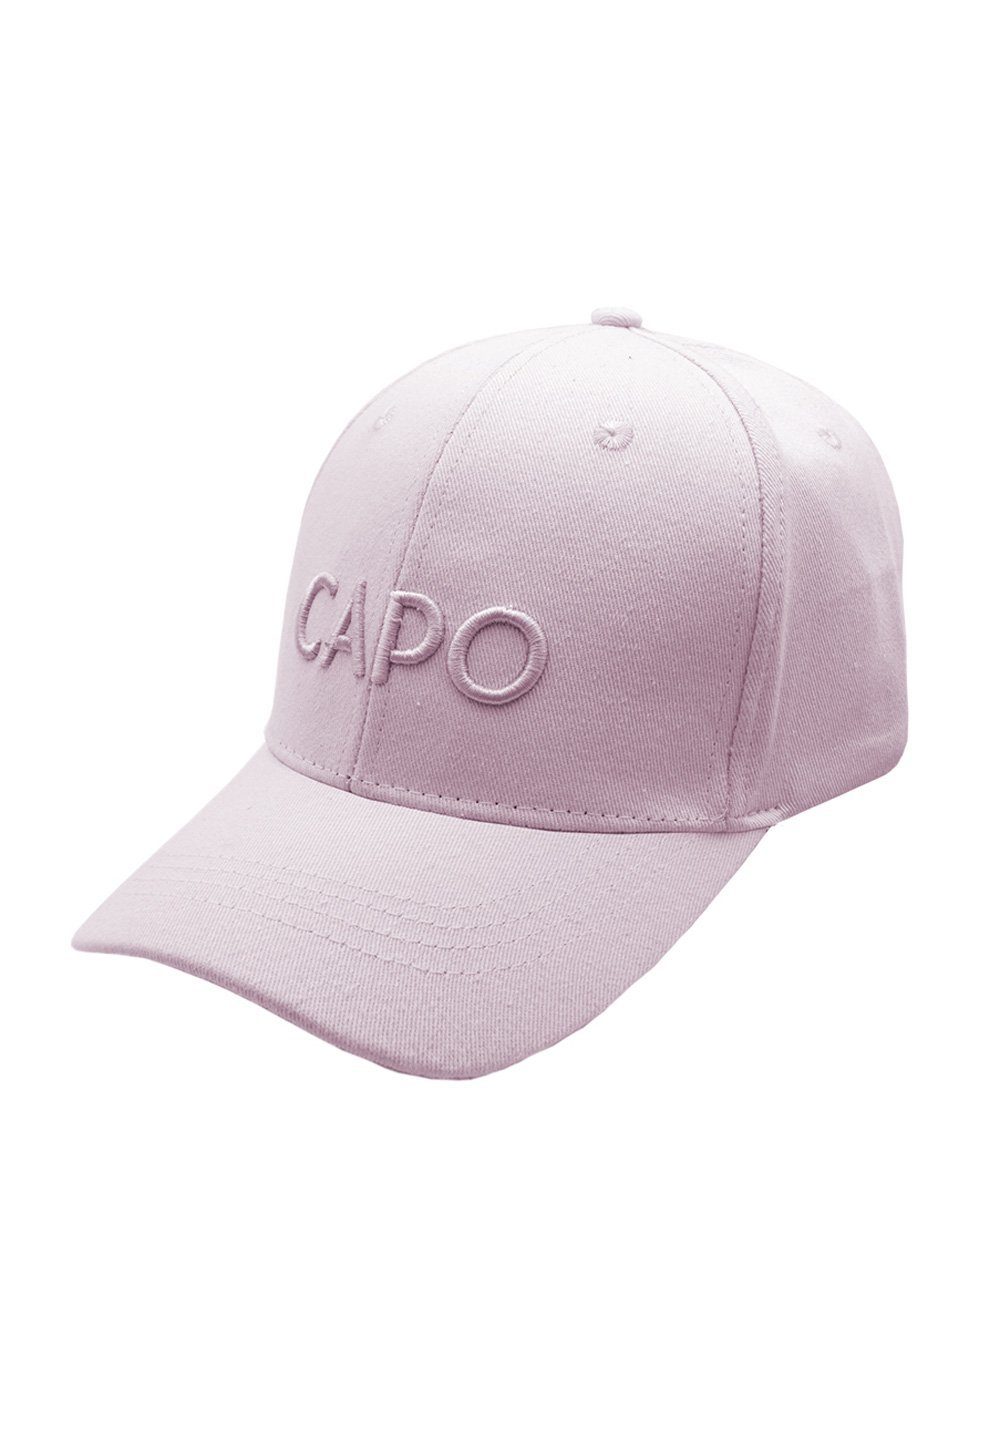 CAPO Baseball Cap Baseballcap 3D-Stickerei, 6 Panel